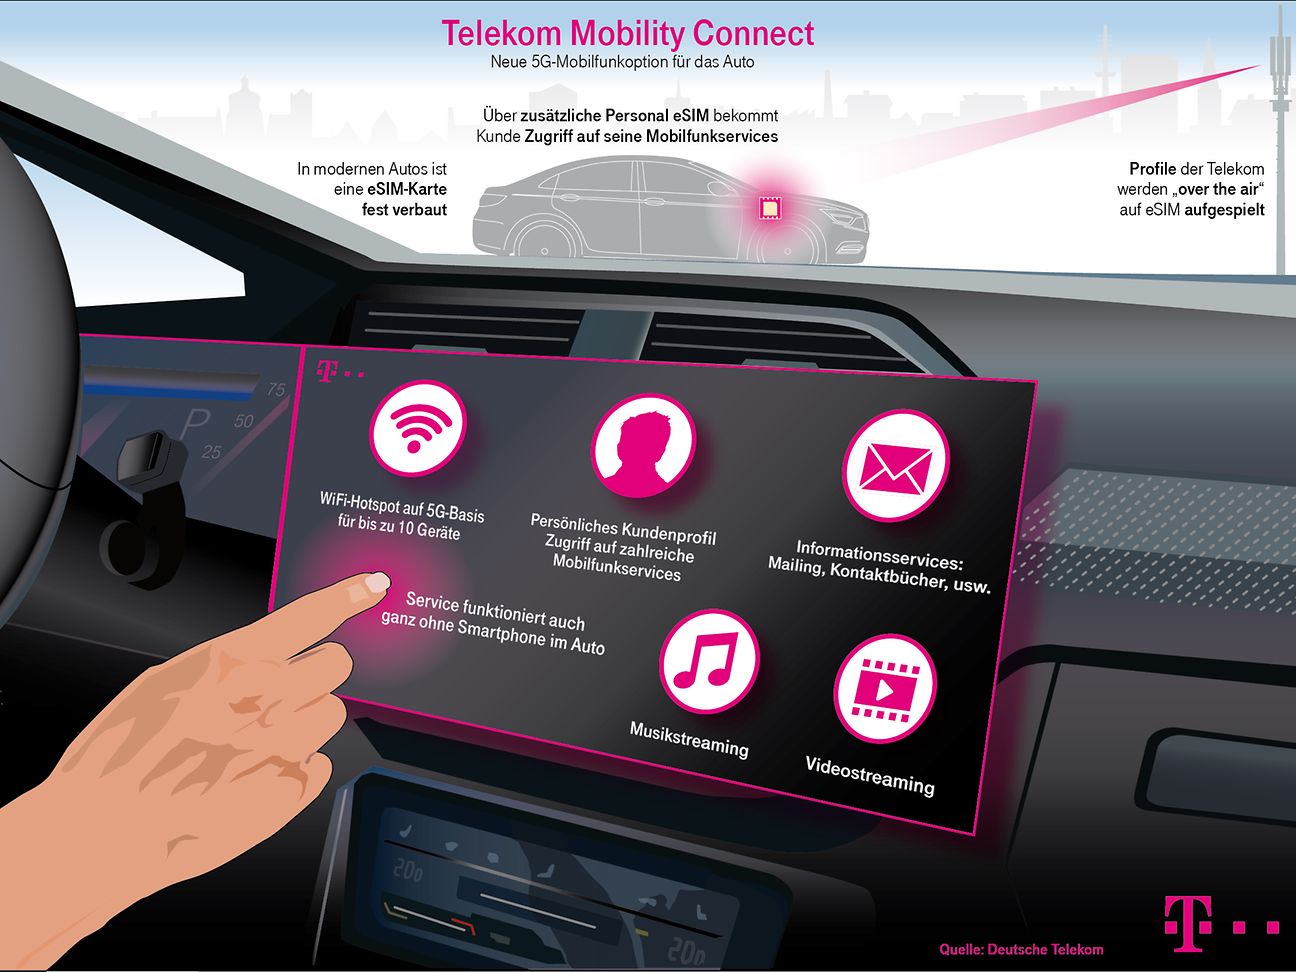 Experience 5G-connectivity in the vehicle | Deutsche Telekom